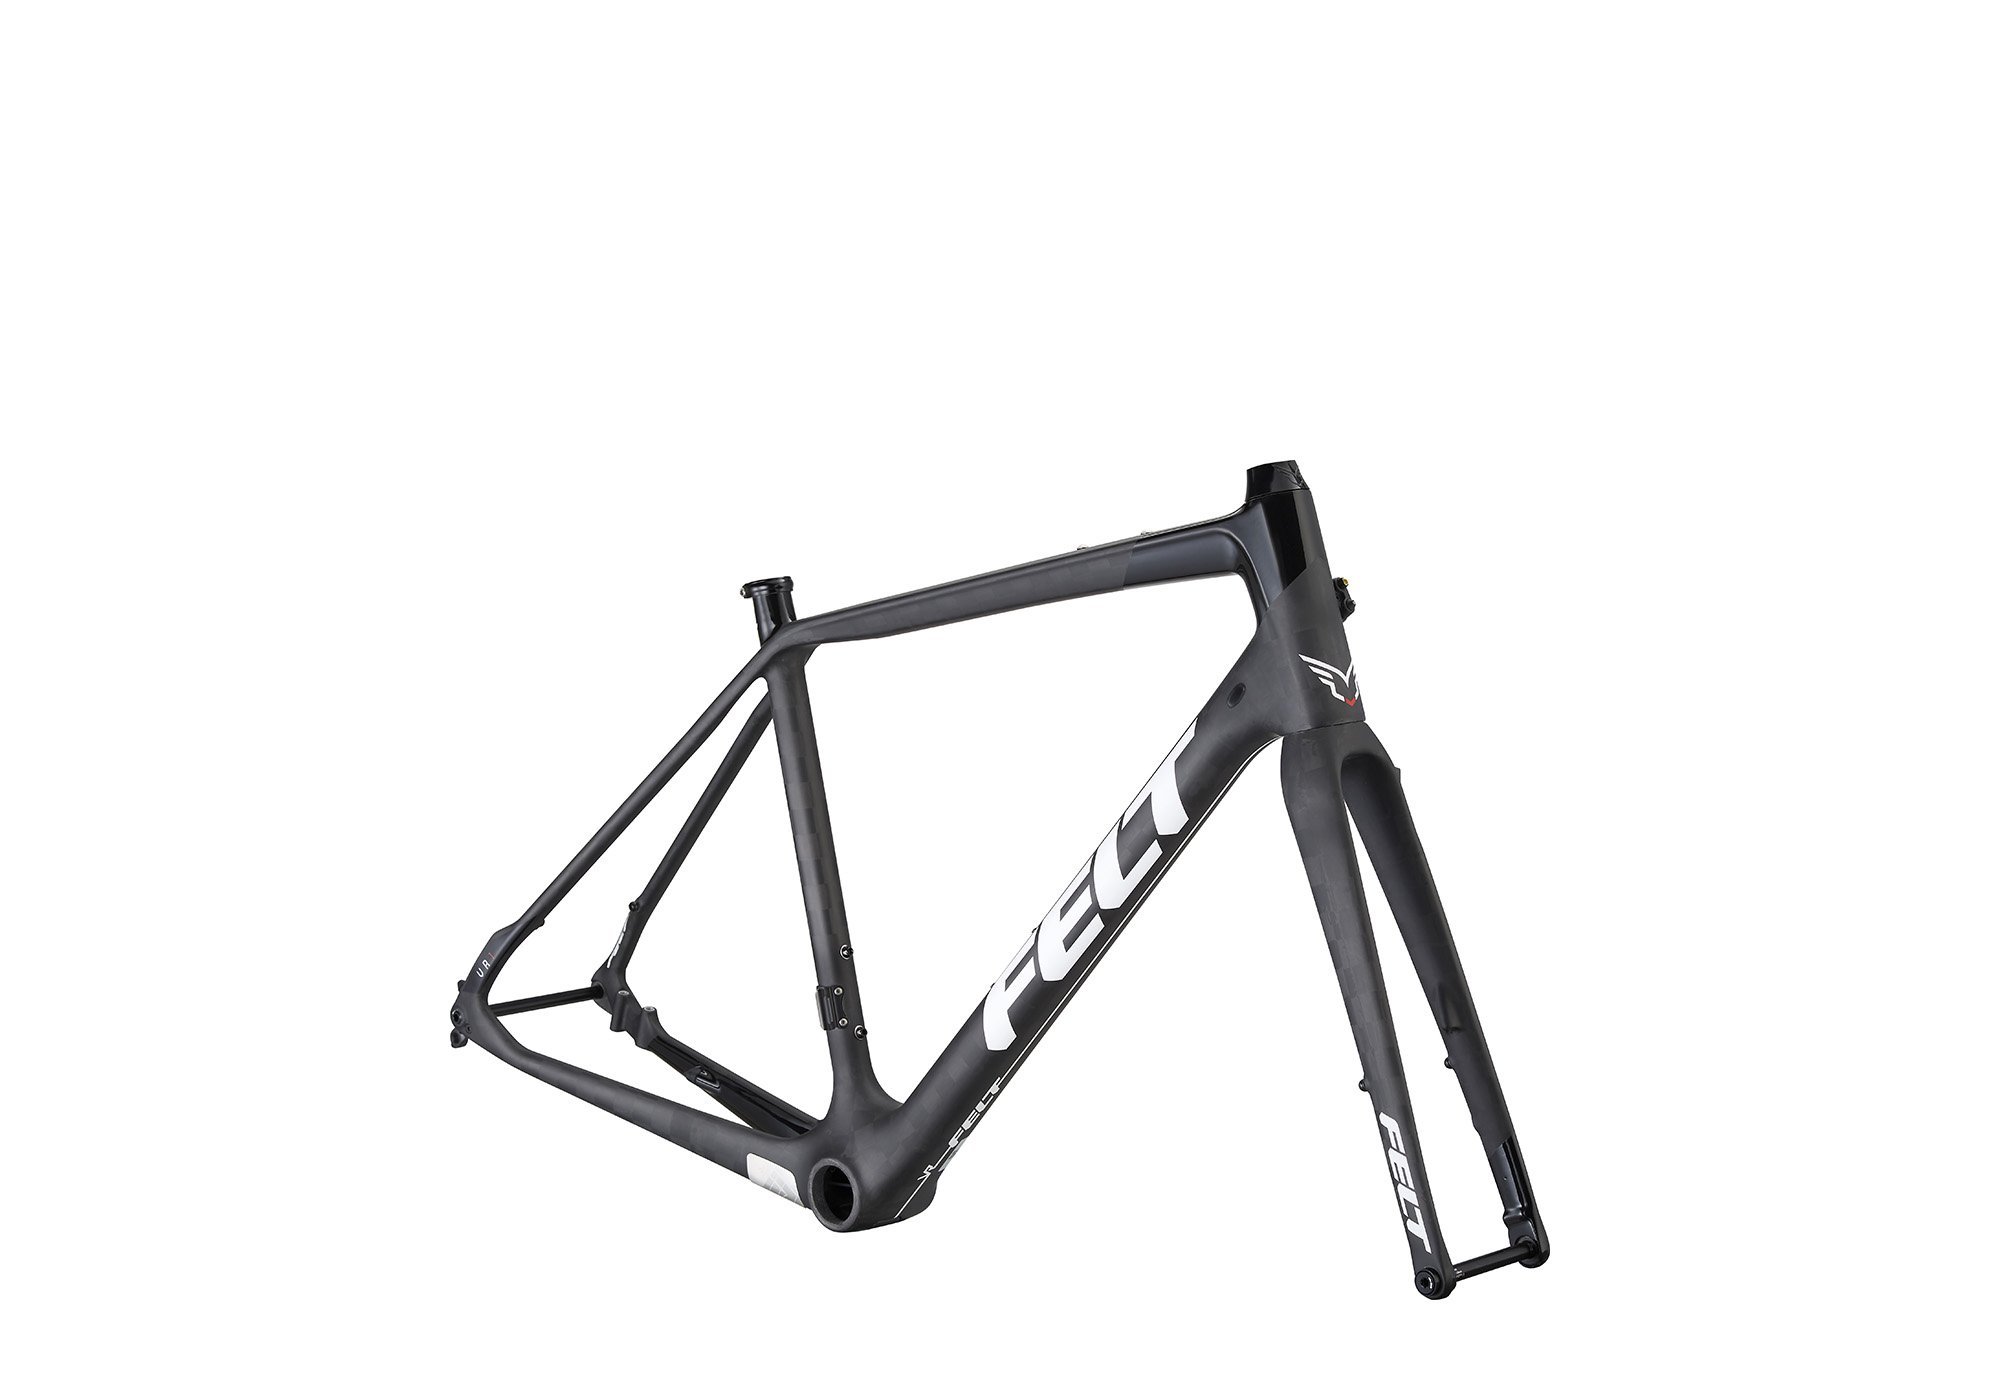 Felt Bicycles Frame VR1 - Buy Now